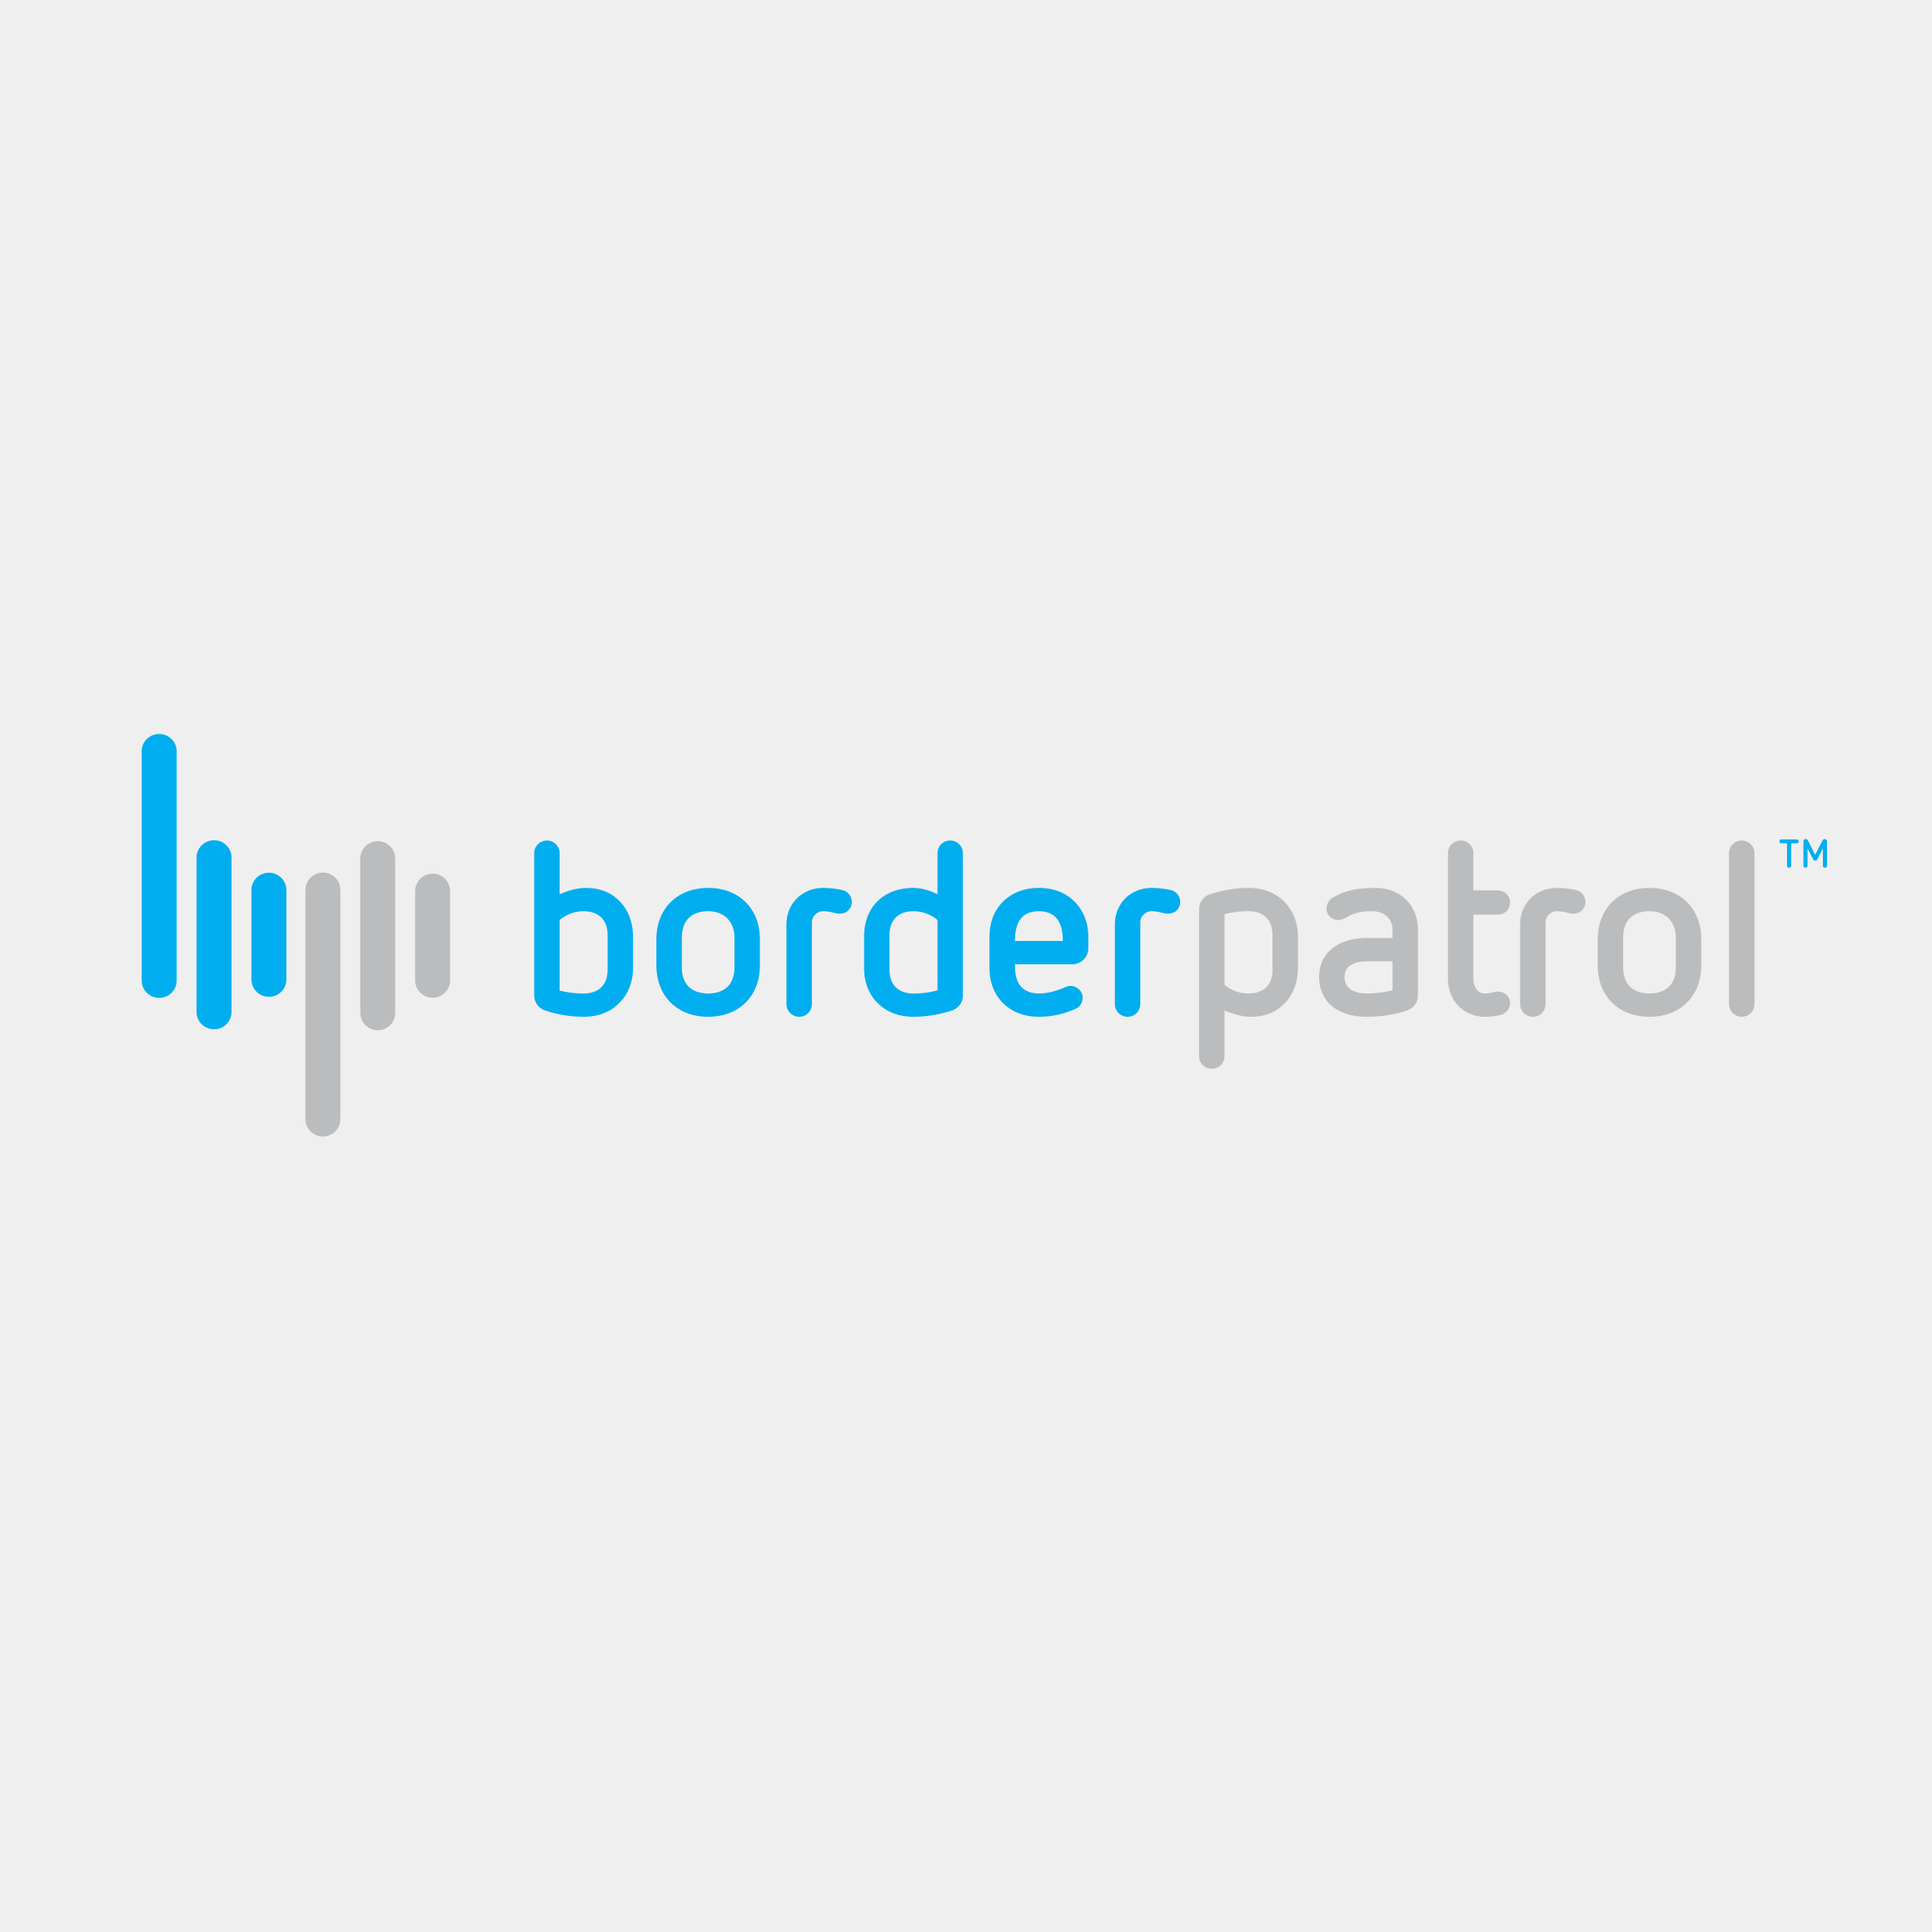 border patrol for dogs logo